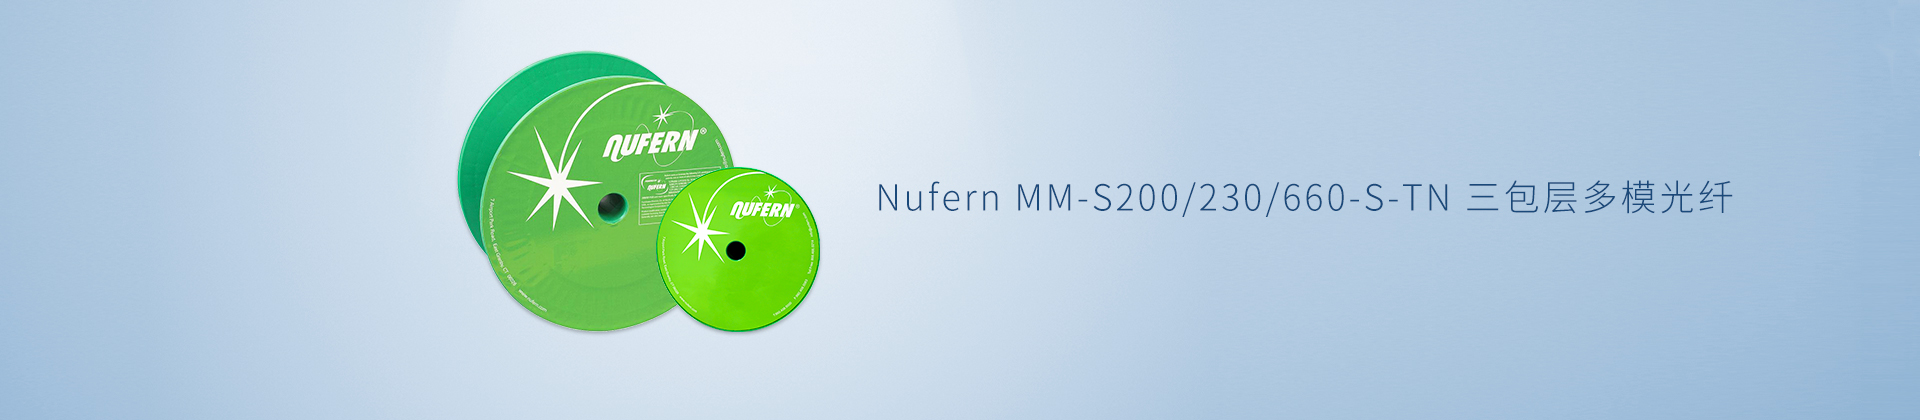 Nufern MM-S200/230/660-S-TN 三包层多模光纤